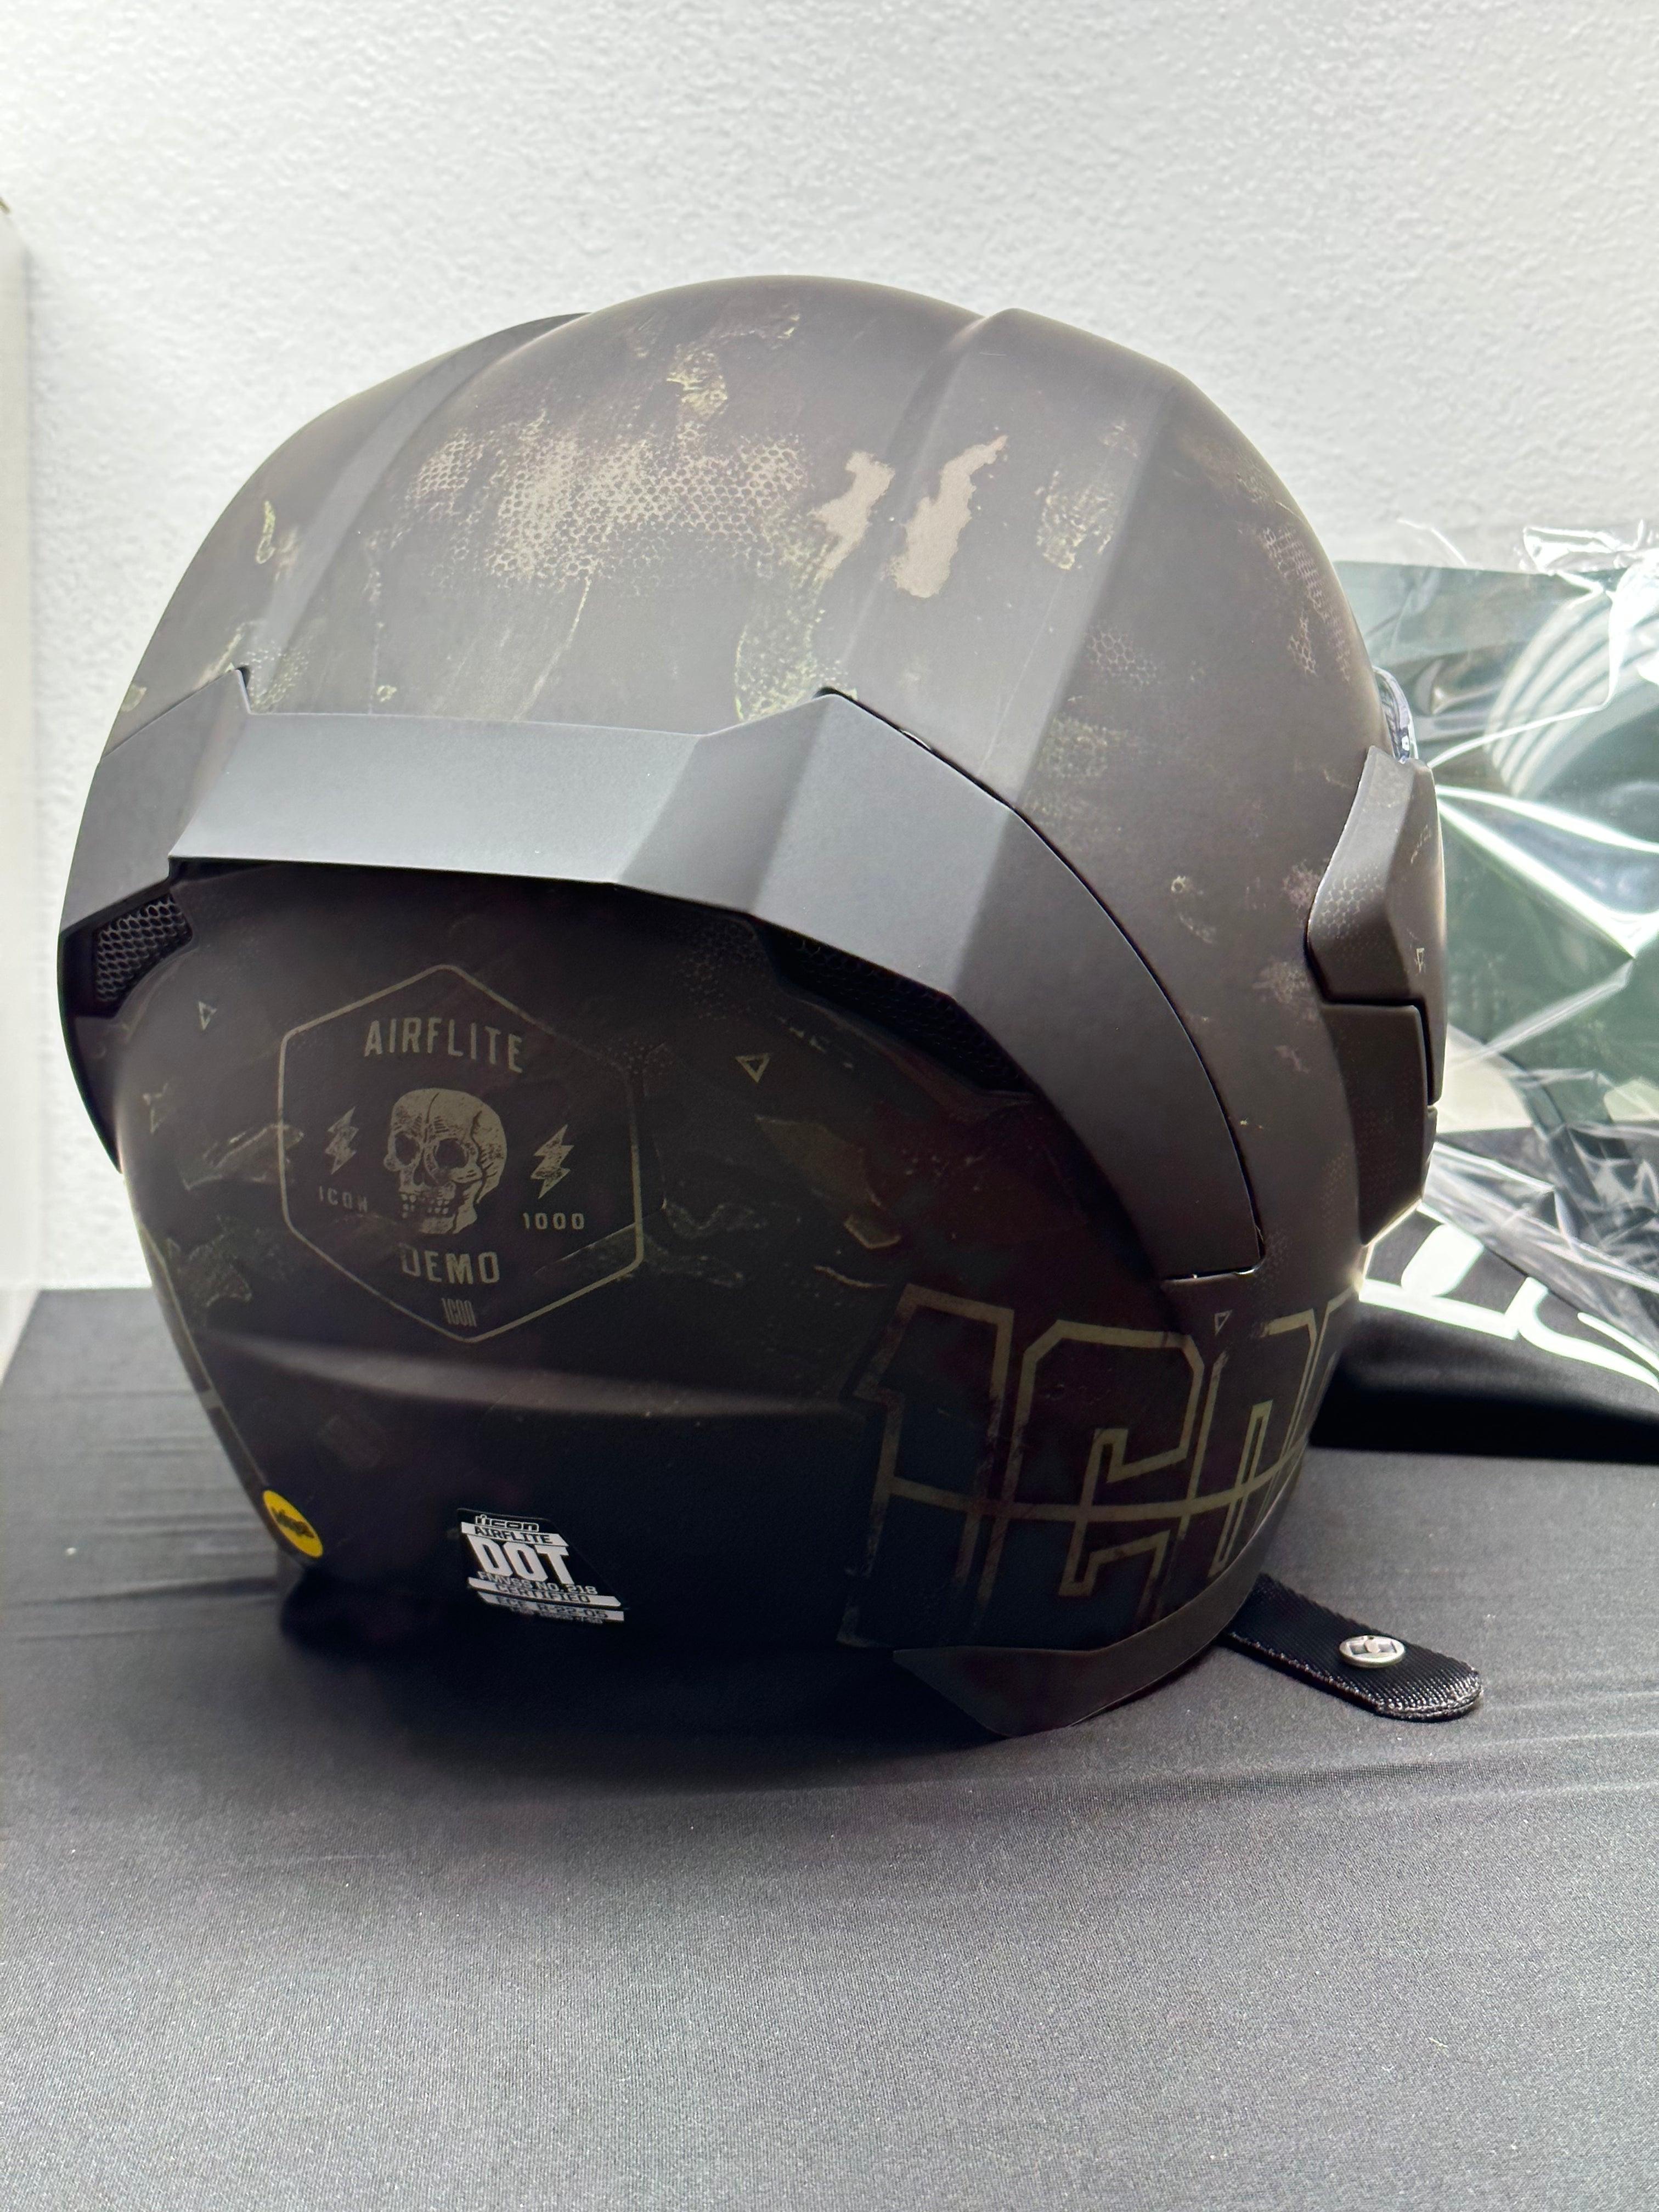 halo emile motorcycle helmet